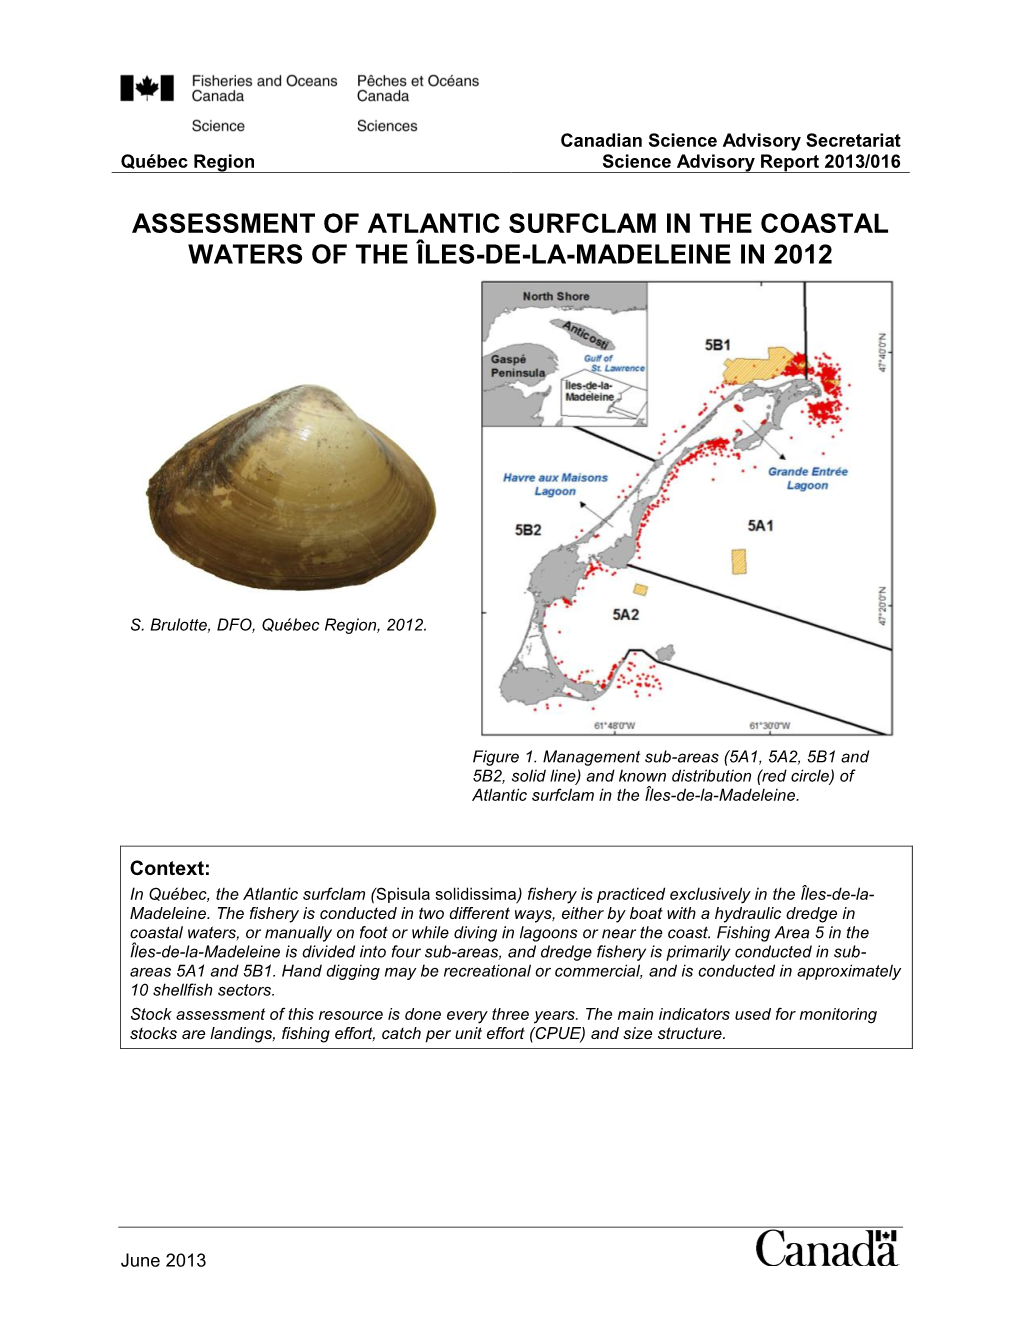 Assessment of Atlantic Surfclam in the Coastal Waters of the Iles-De-La